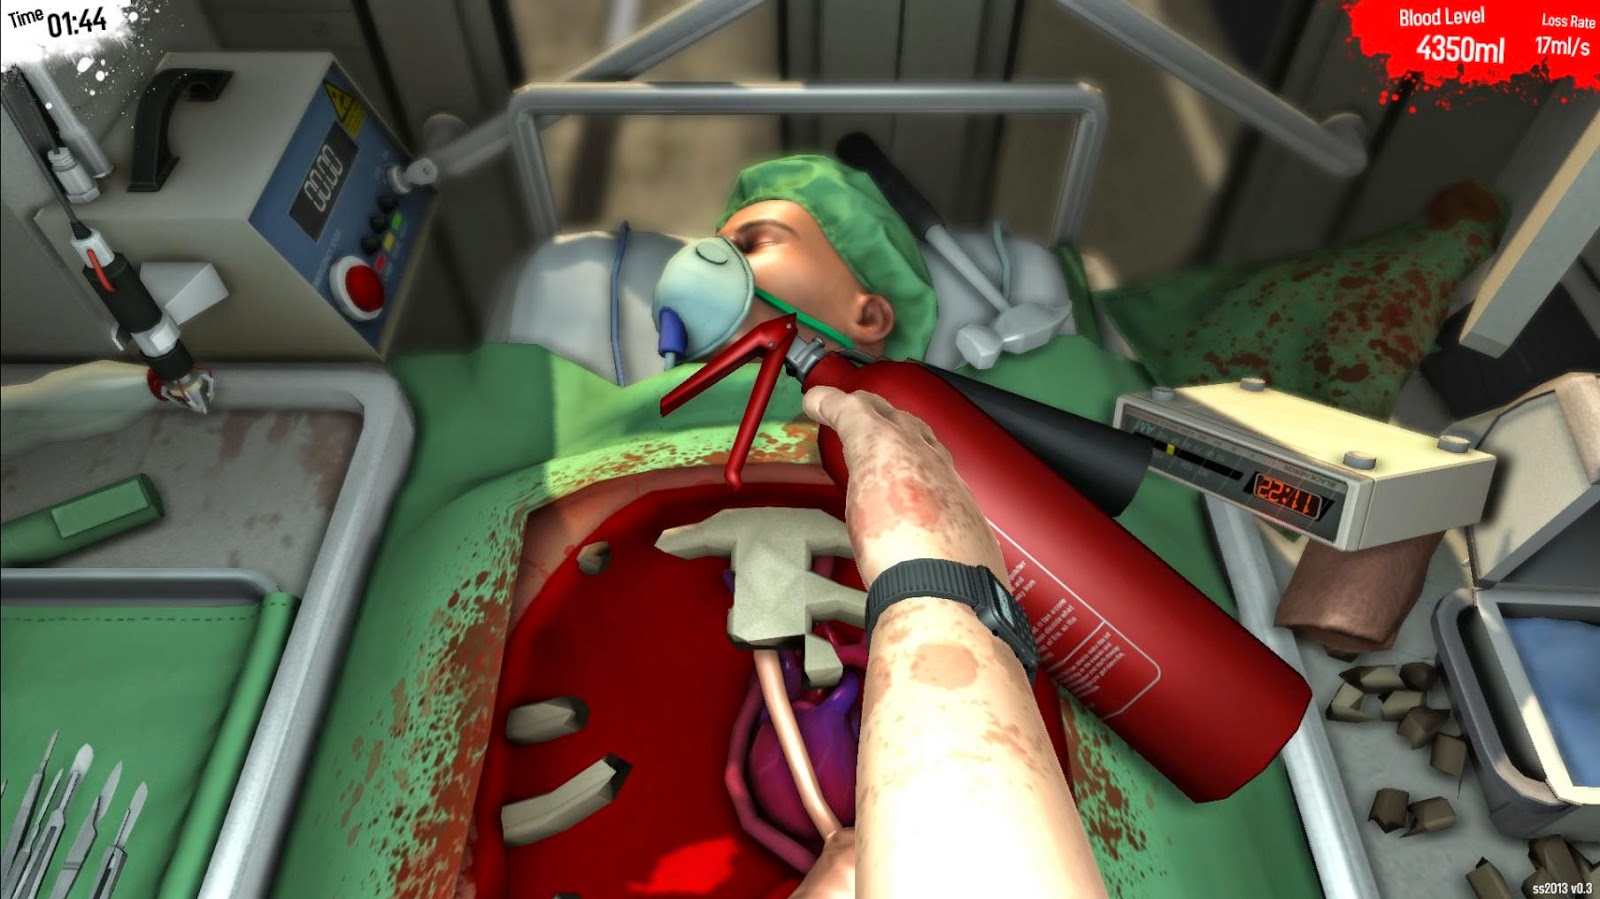 Download Game Surgeon Simulator Full Version for PC